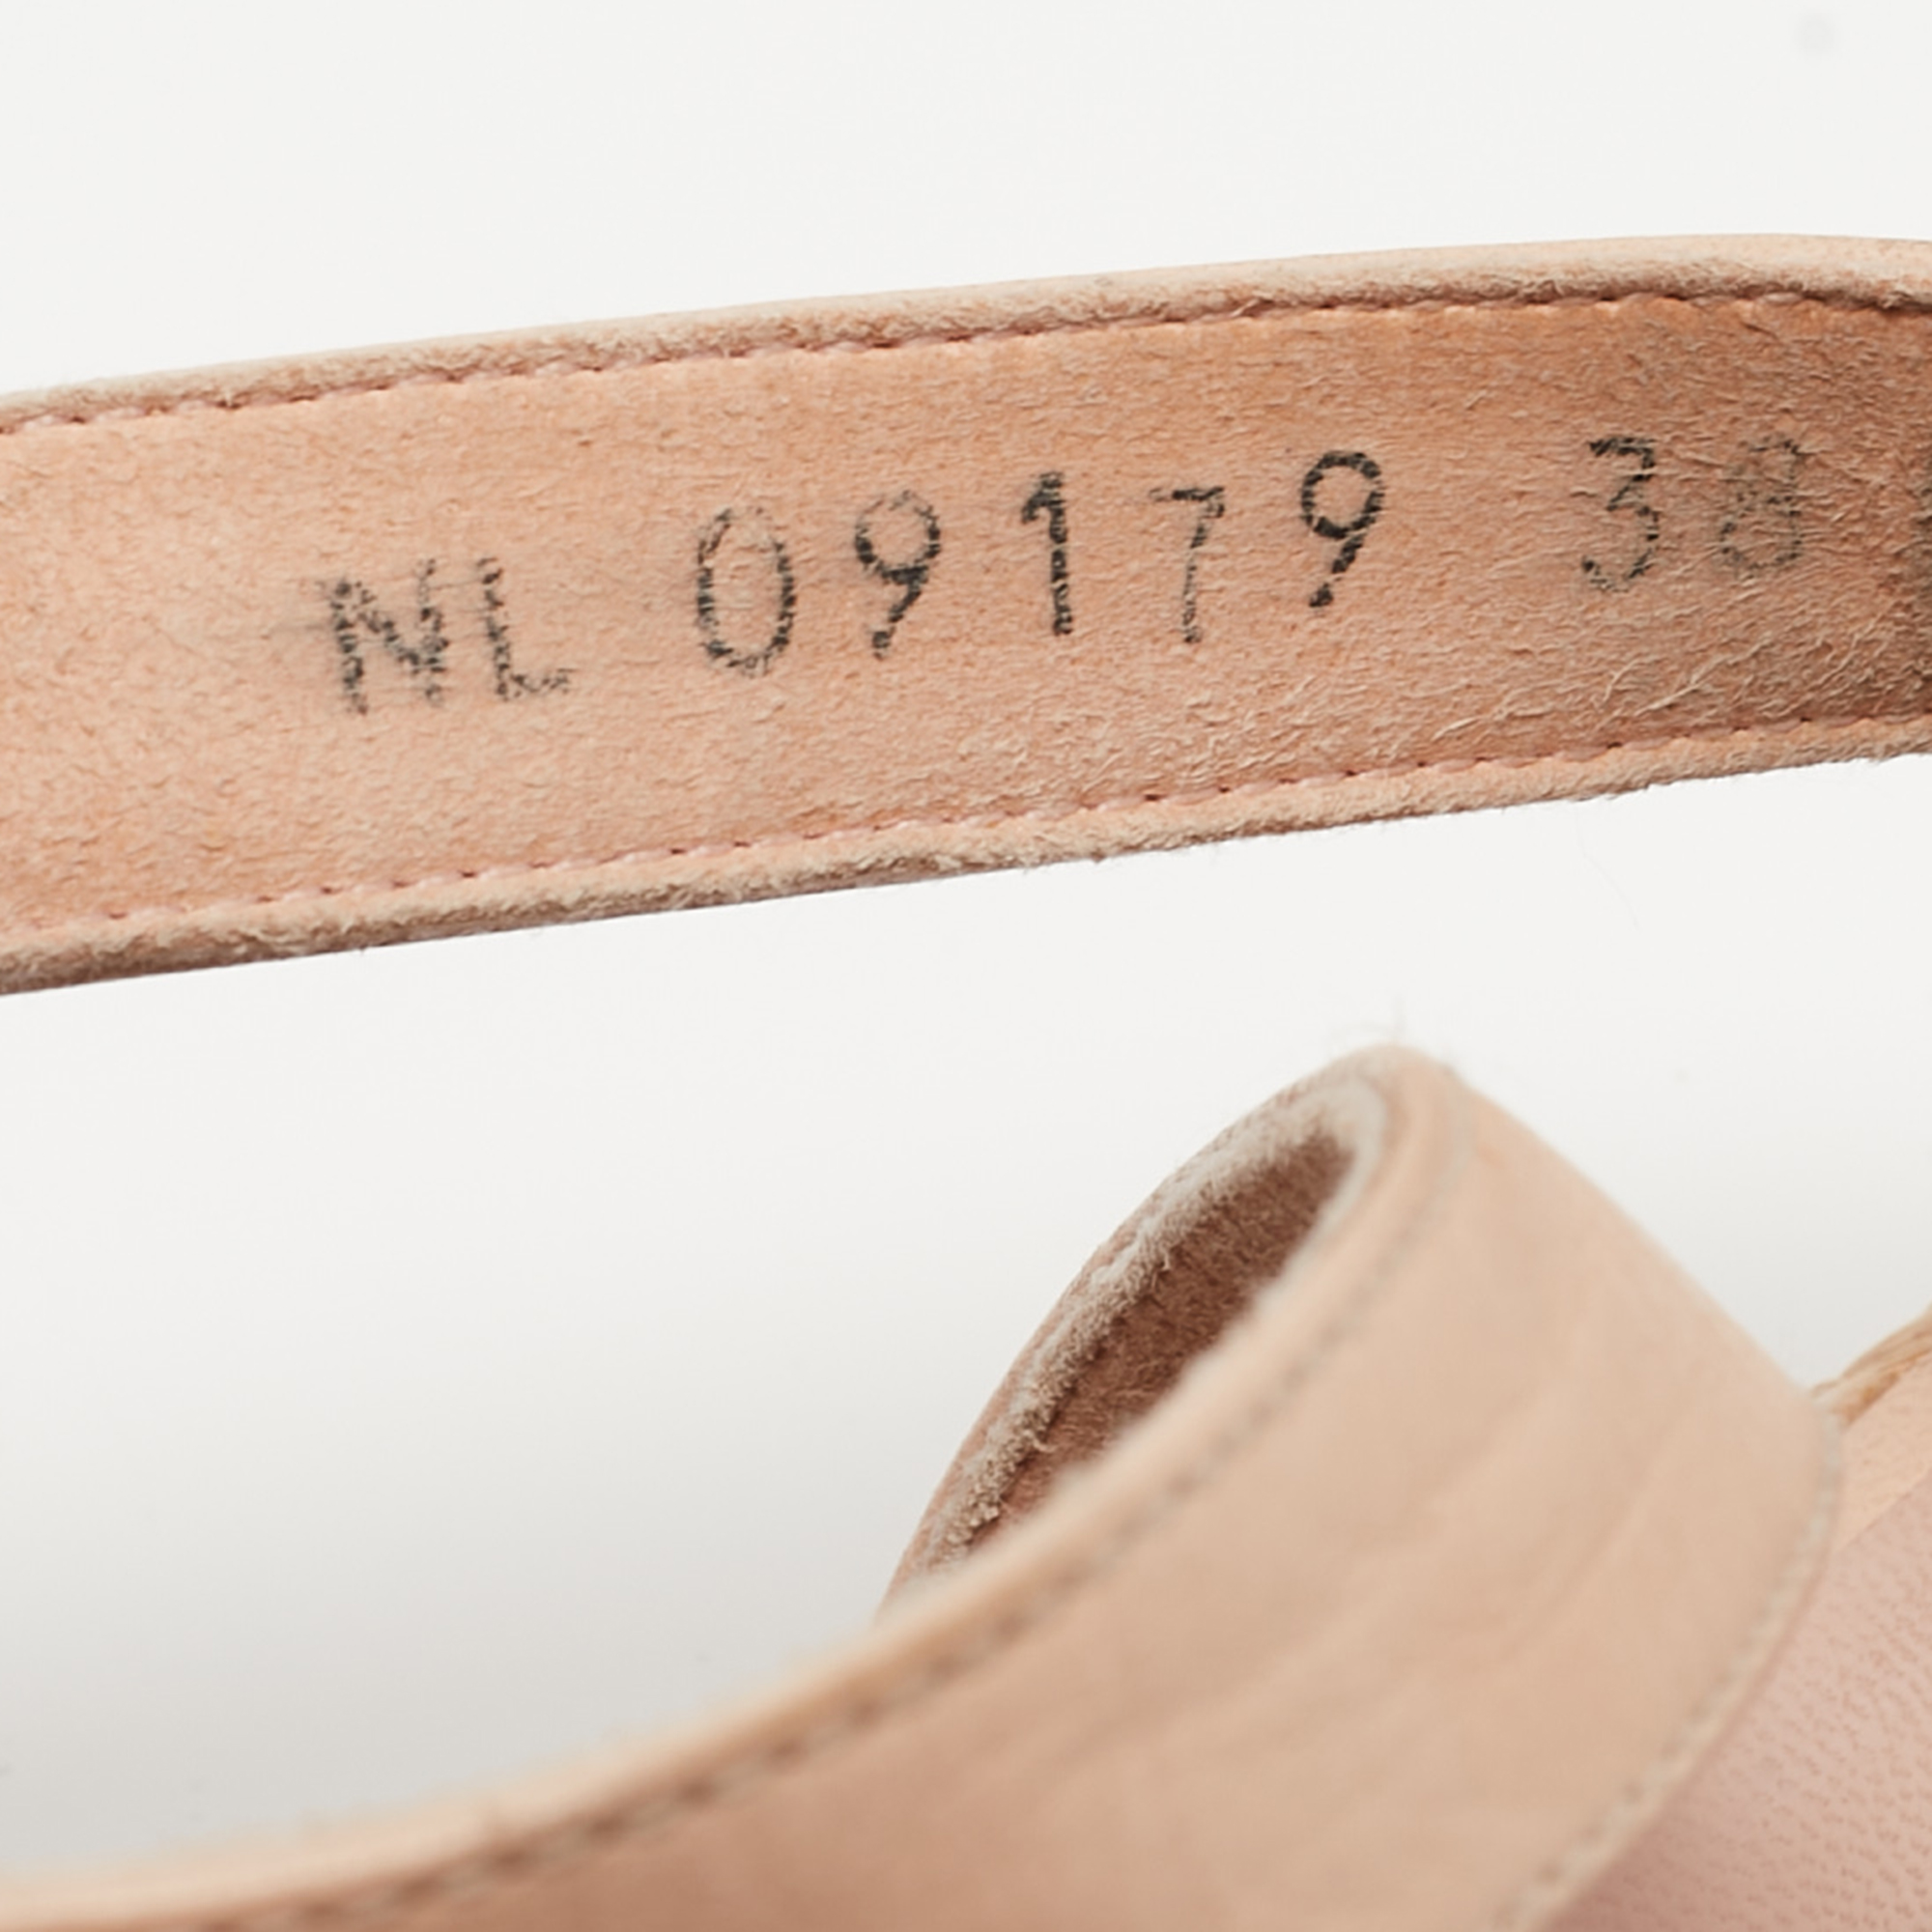 Stuart Weitzman Silver/Beige Leather And Metal Embellished Slingback Sandals Size 38